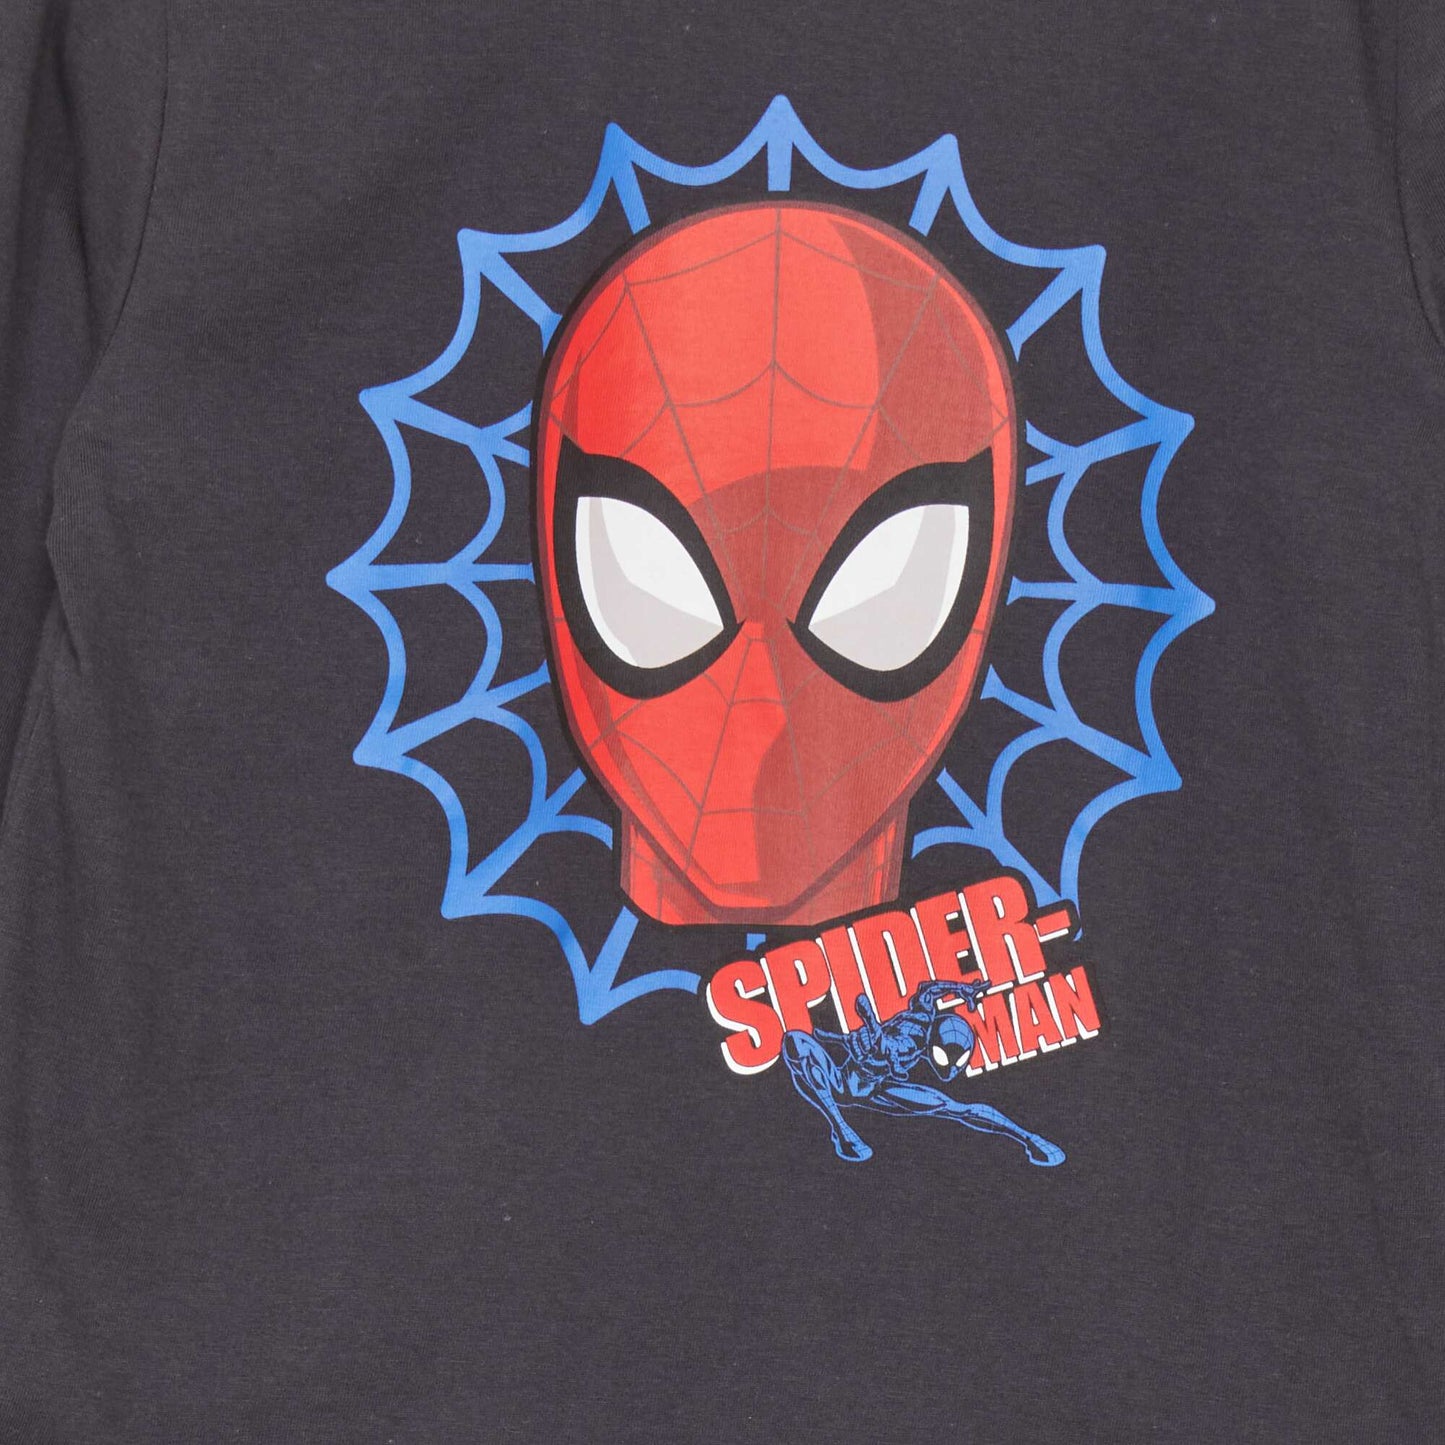 Ensemble pyjama 'Spider Man' Gris